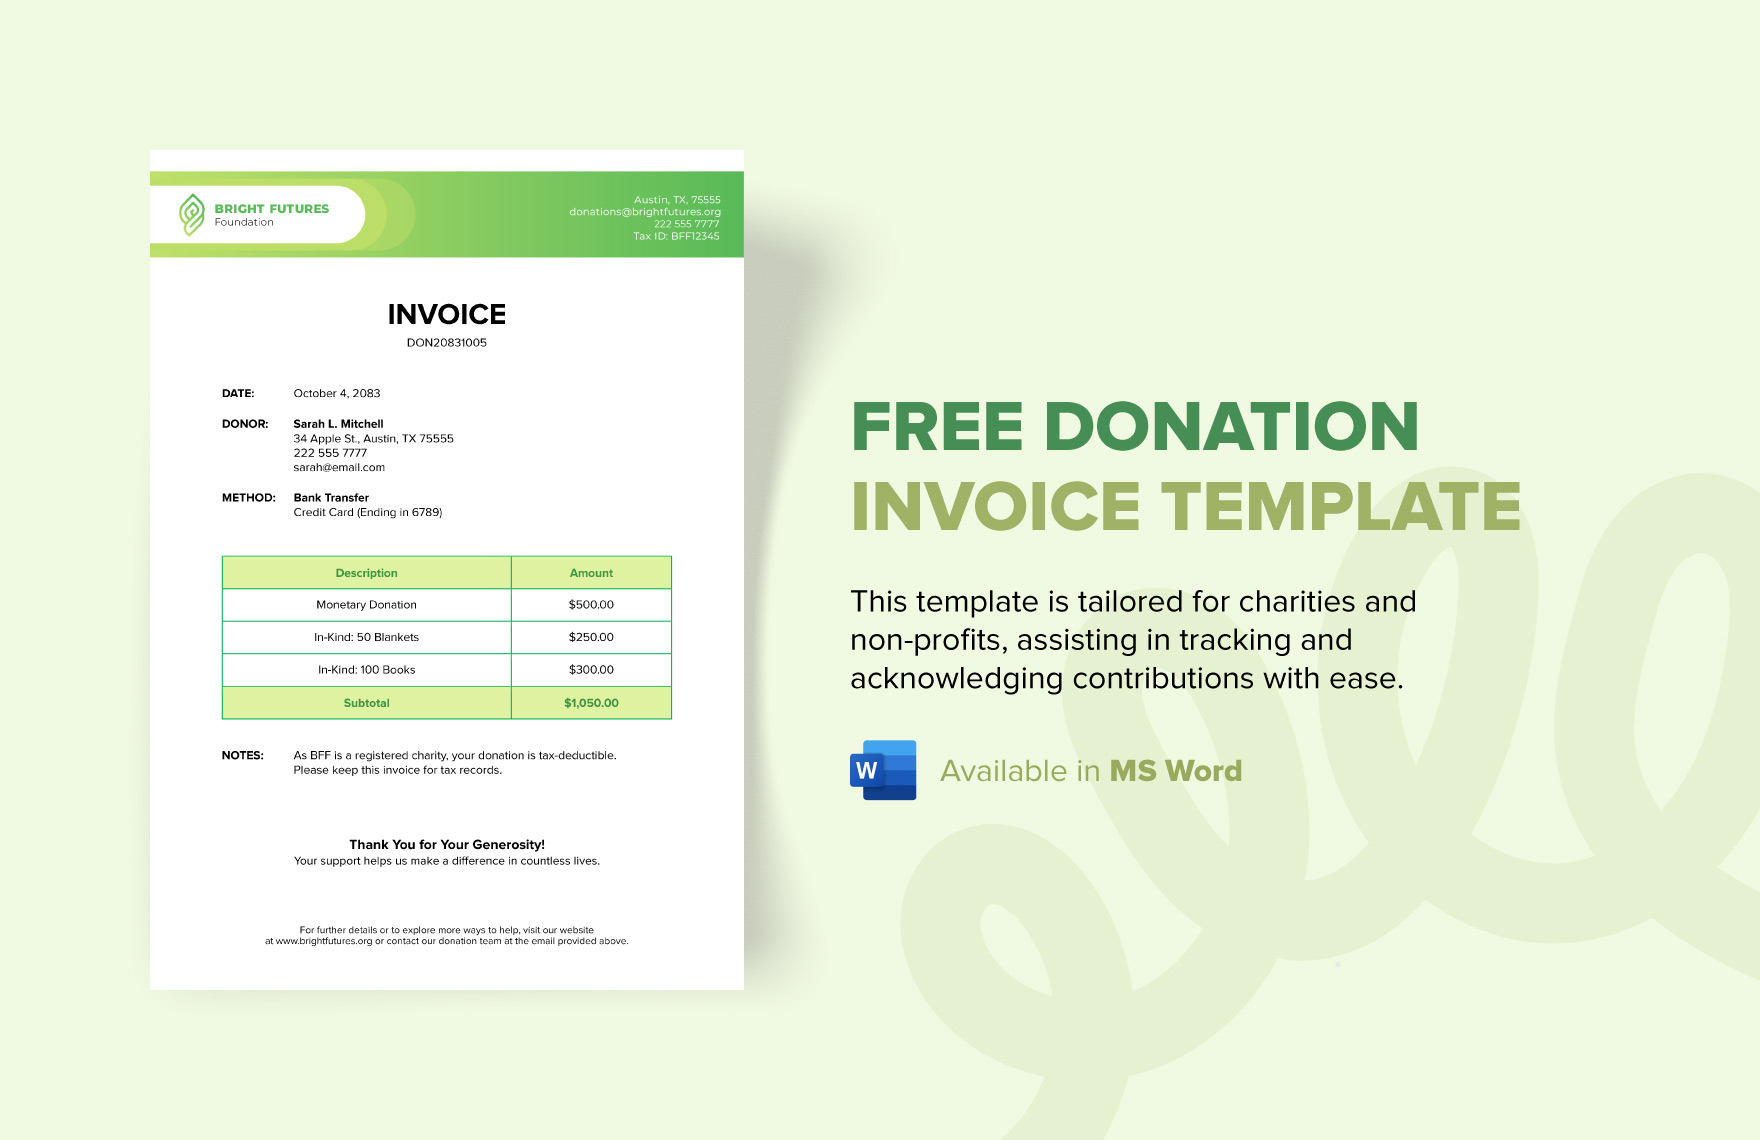 Donation Invoice Template